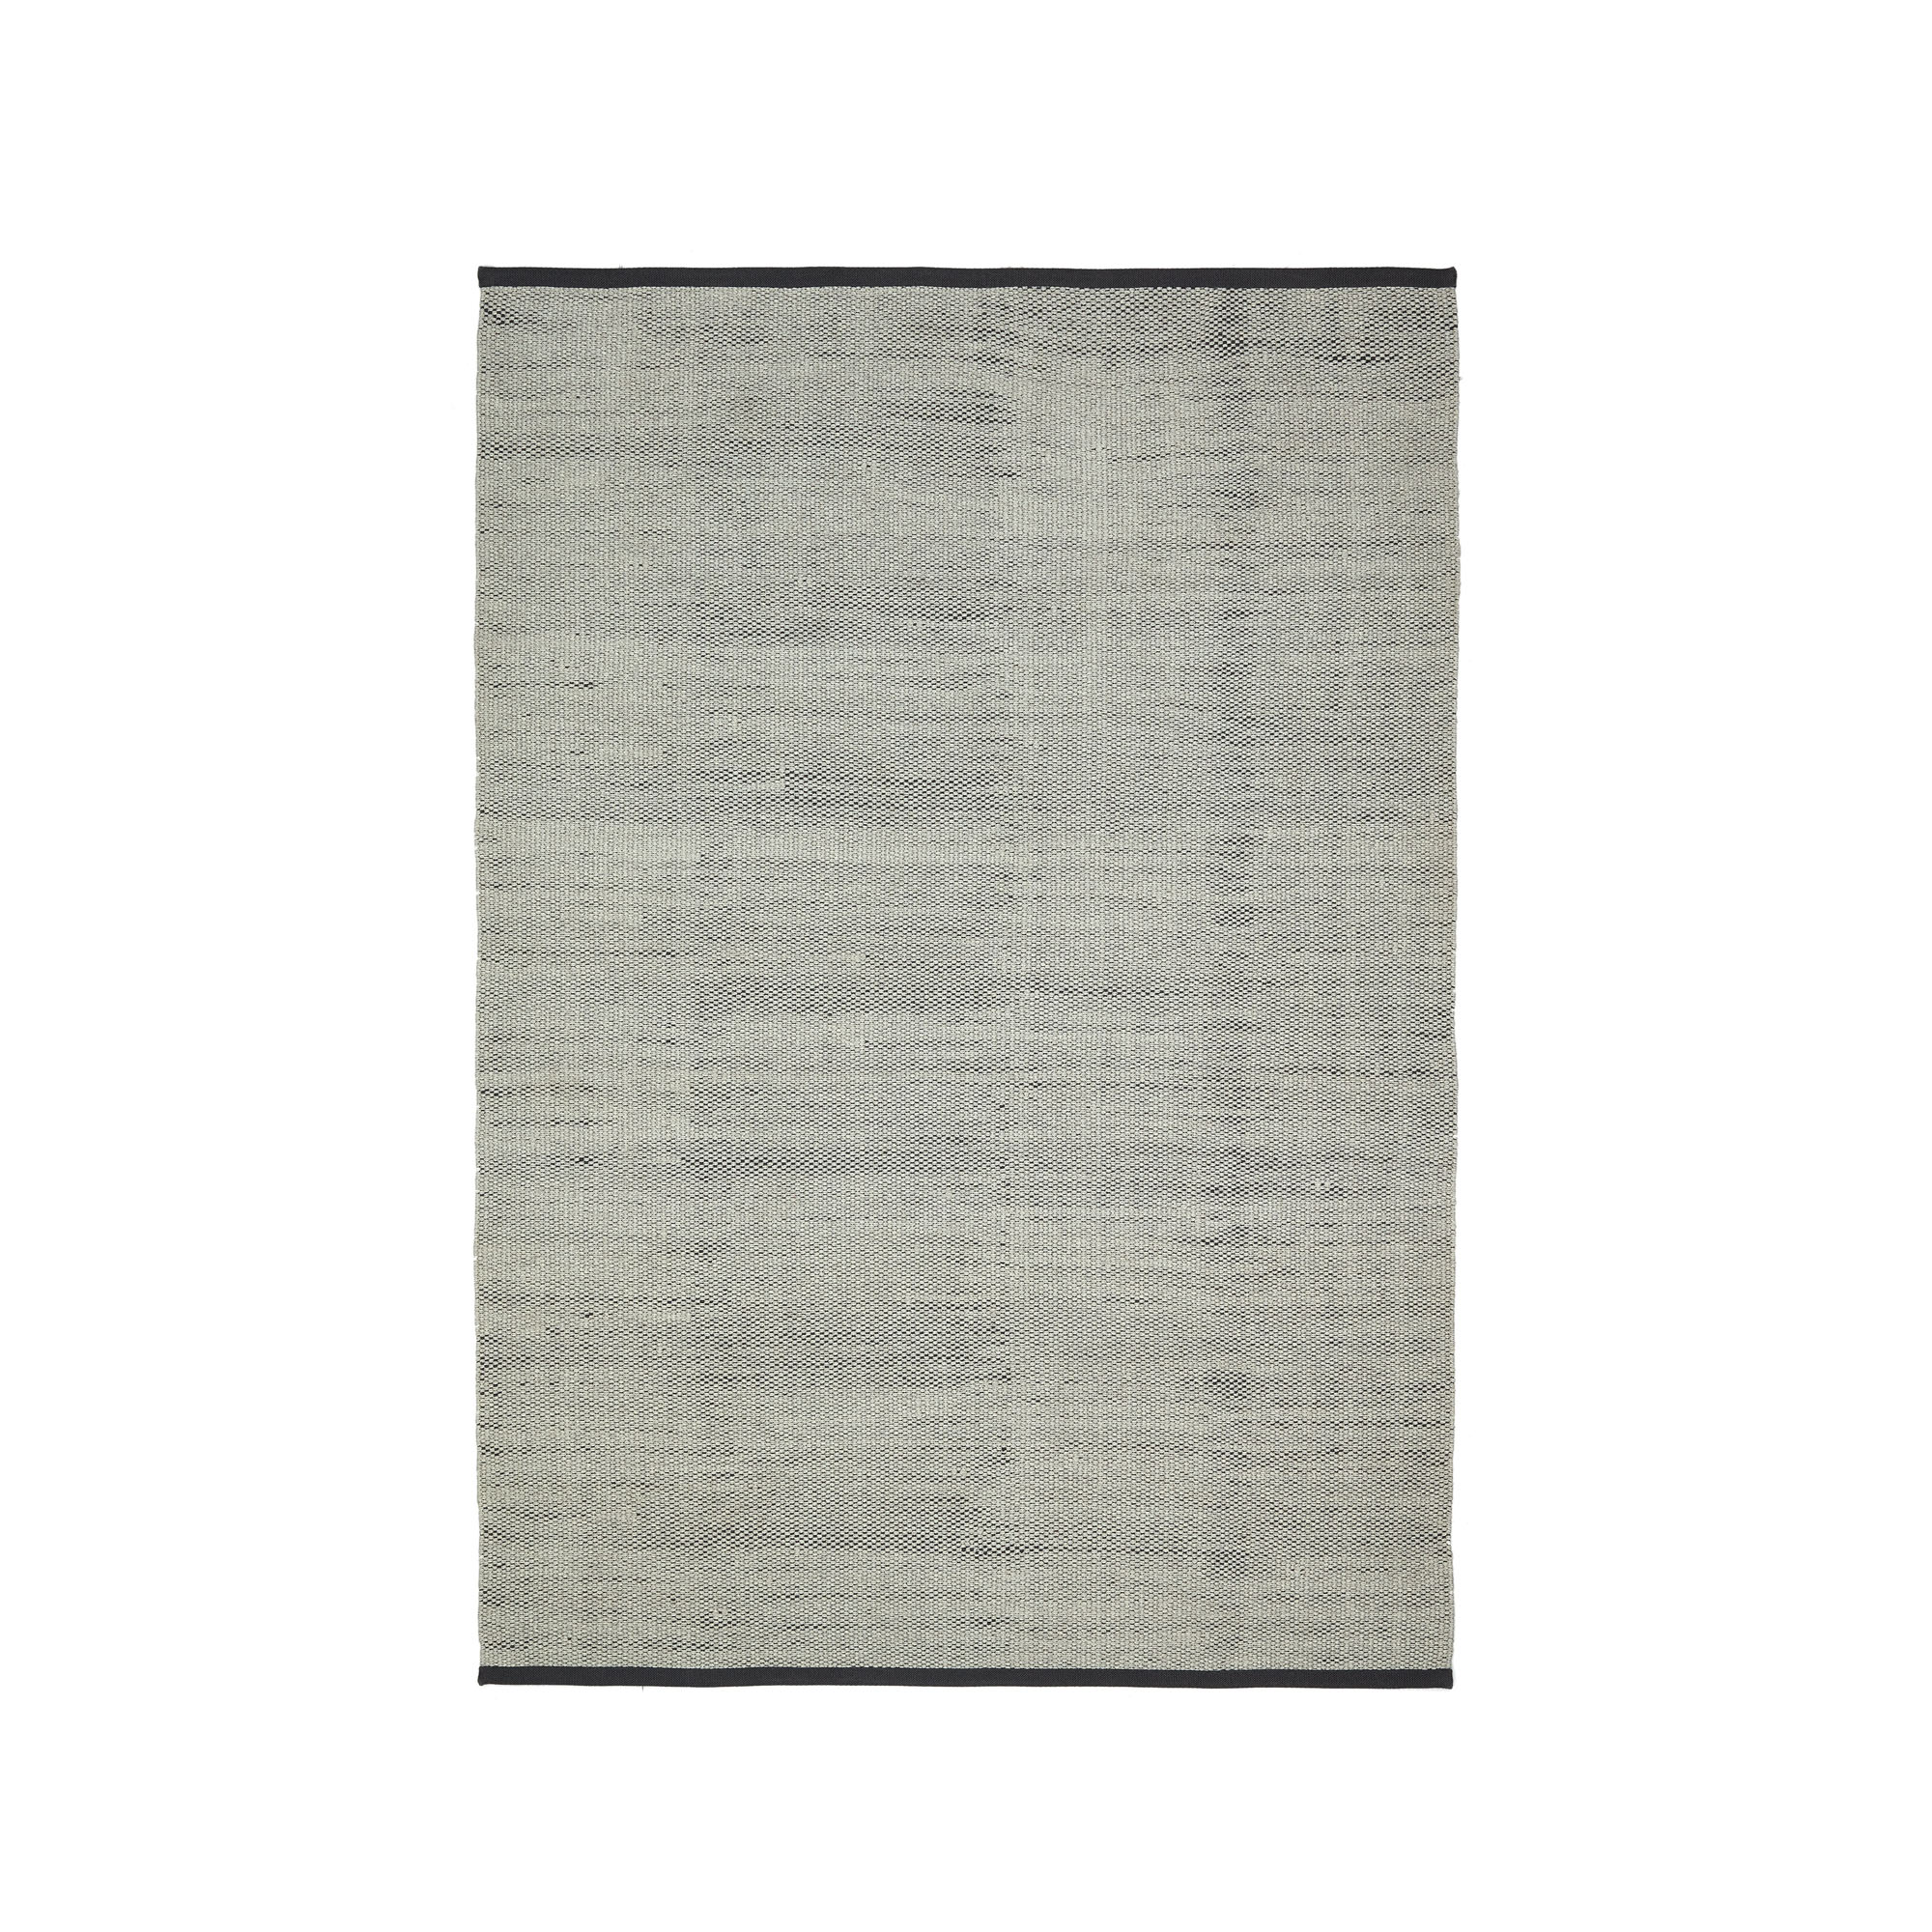 LAFORMA Canyet gulvtæppe, rektangulær - grå syntetiske fibre (160x230)